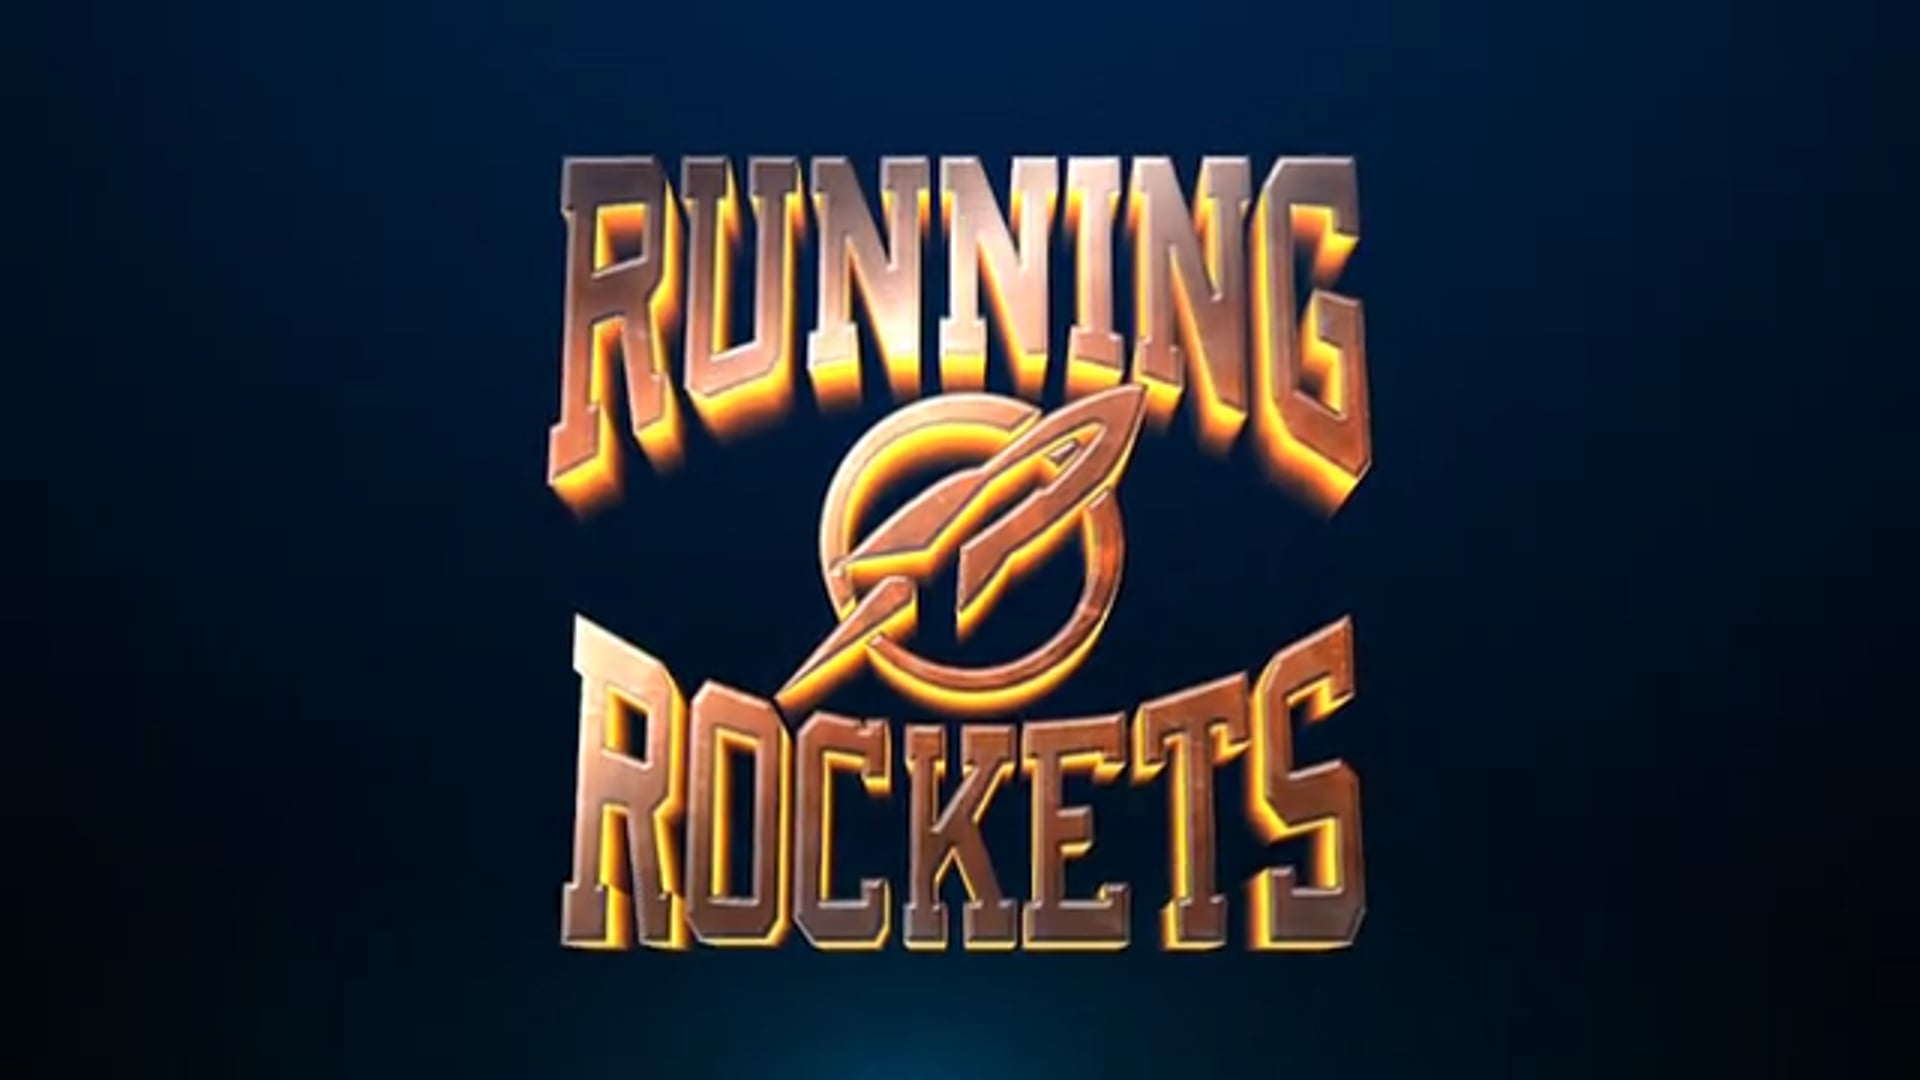 Running Rockets Promotional Video